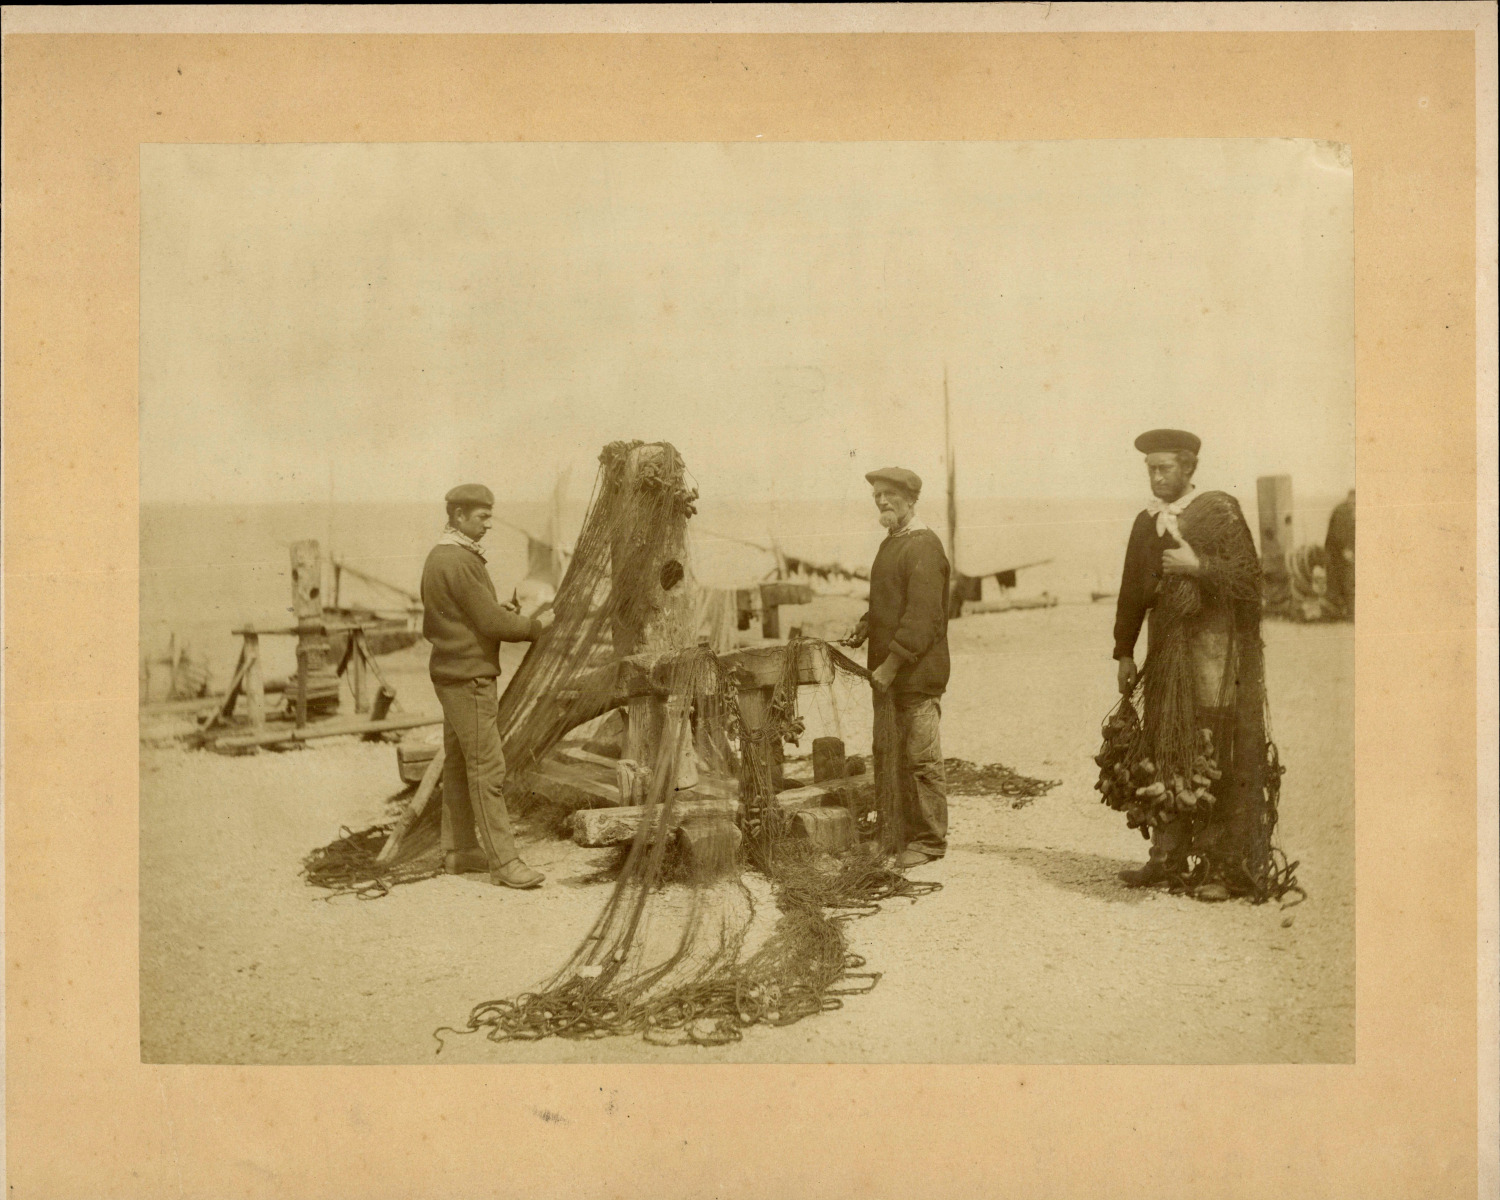 France, Étretat, fishermen repairing their nets, ca.1875, vintage albumin print